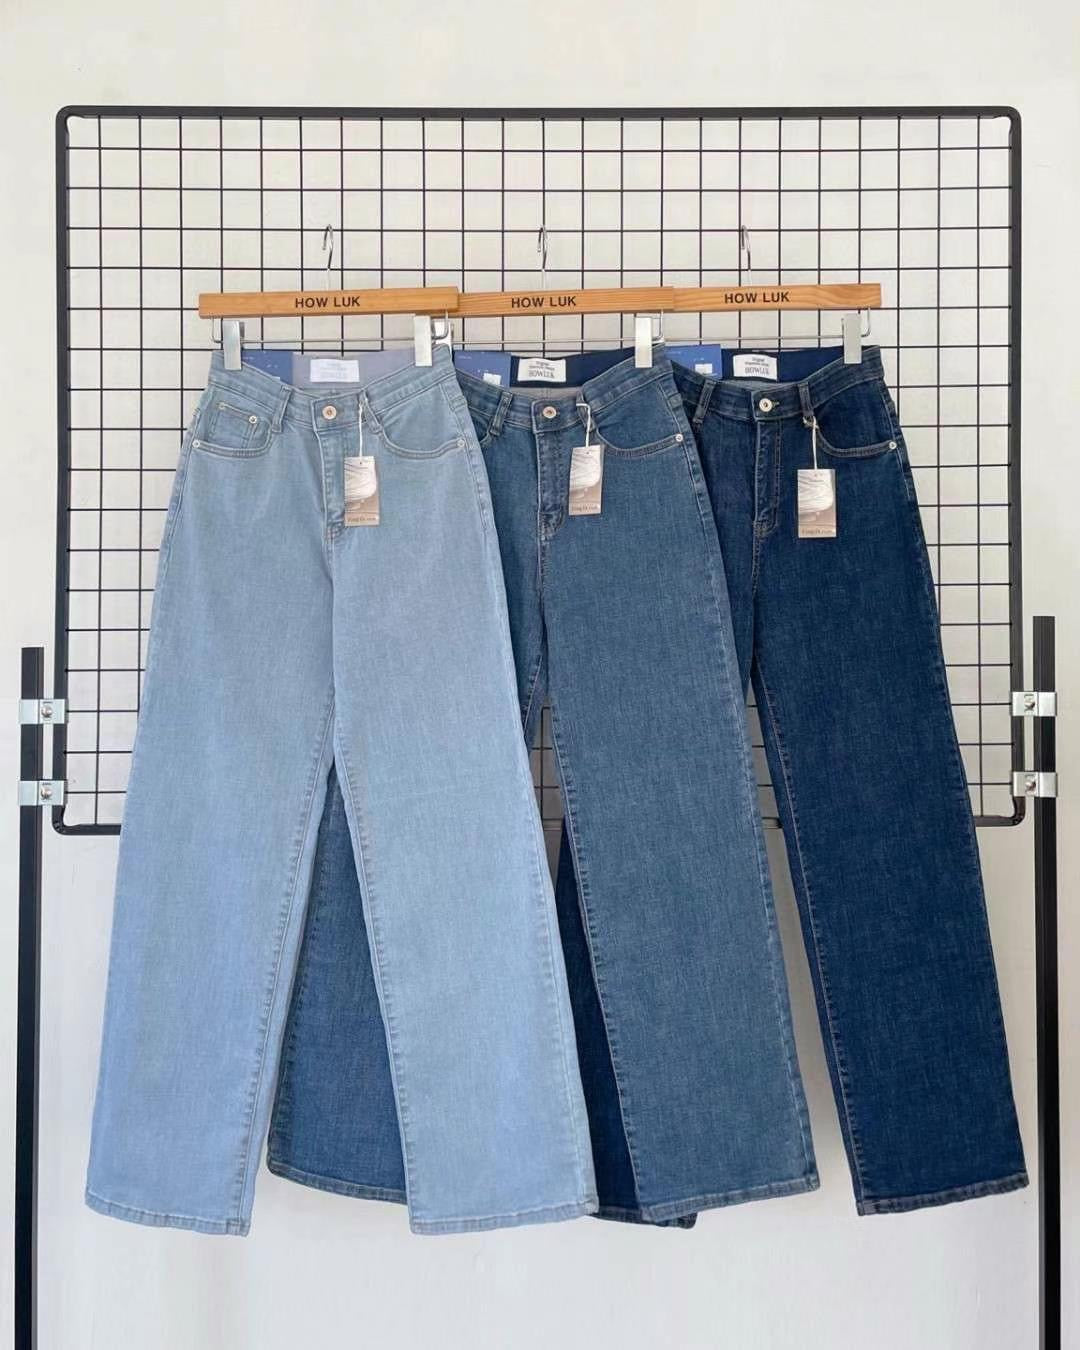 Howluk Premium_Baggy Jeans